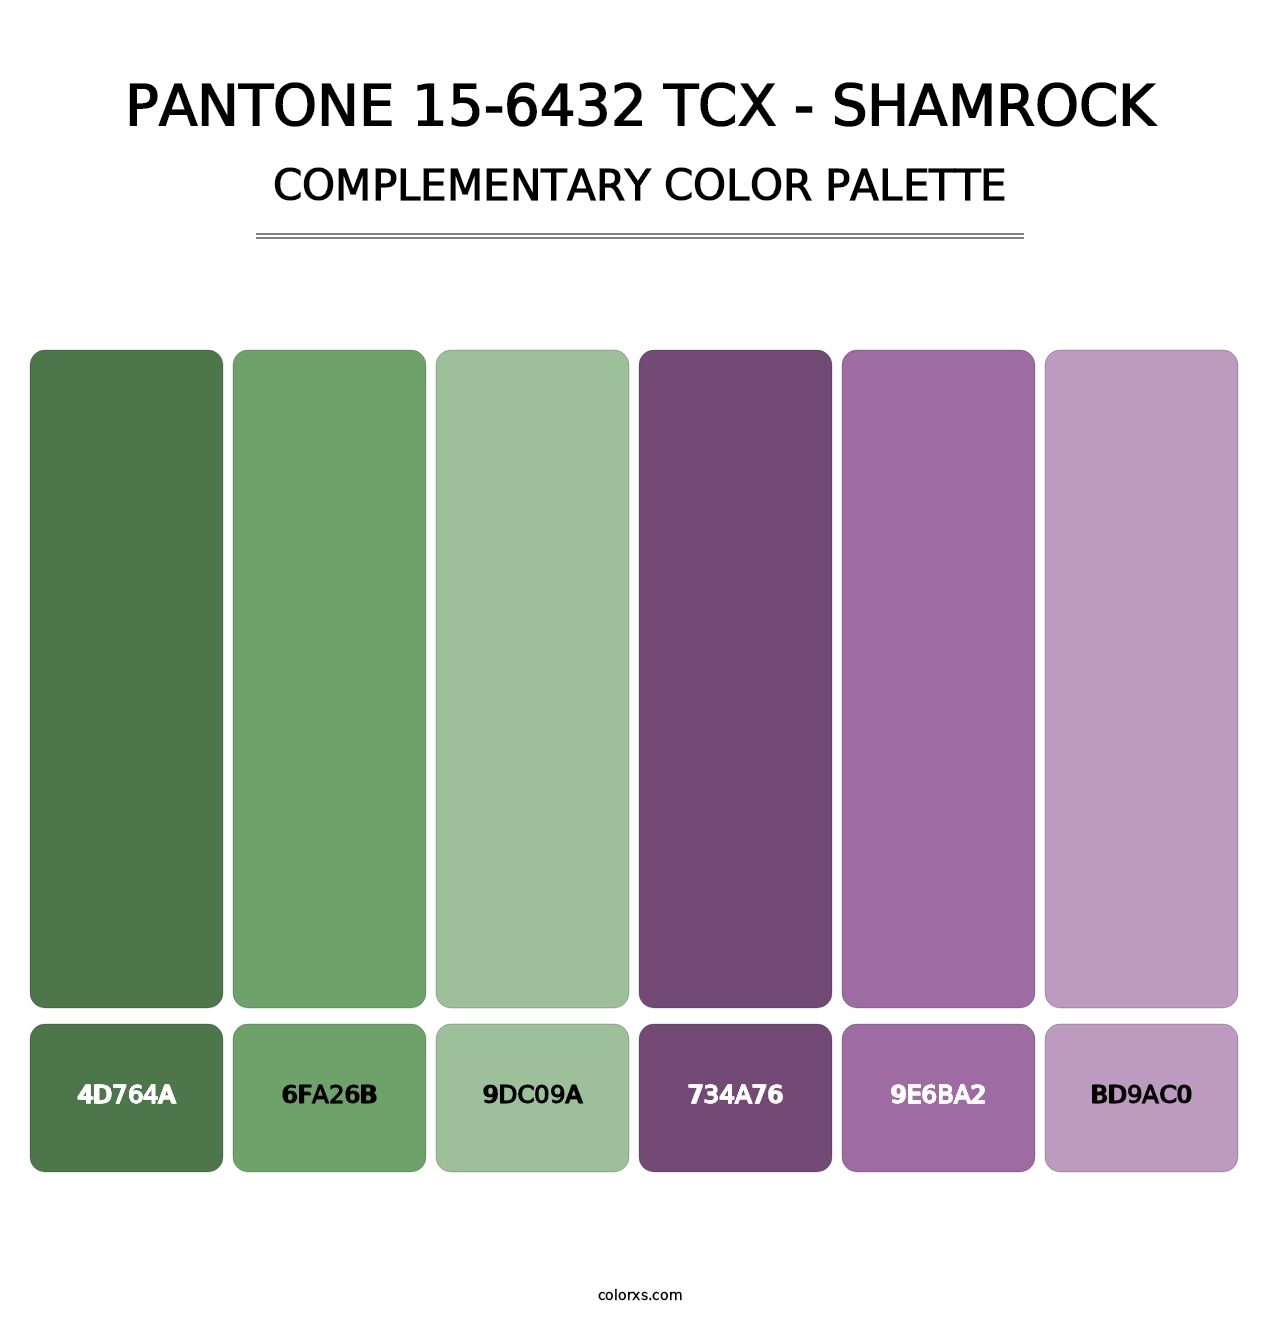 PANTONE 15-6432 TCX - Shamrock - Complementary Color Palette